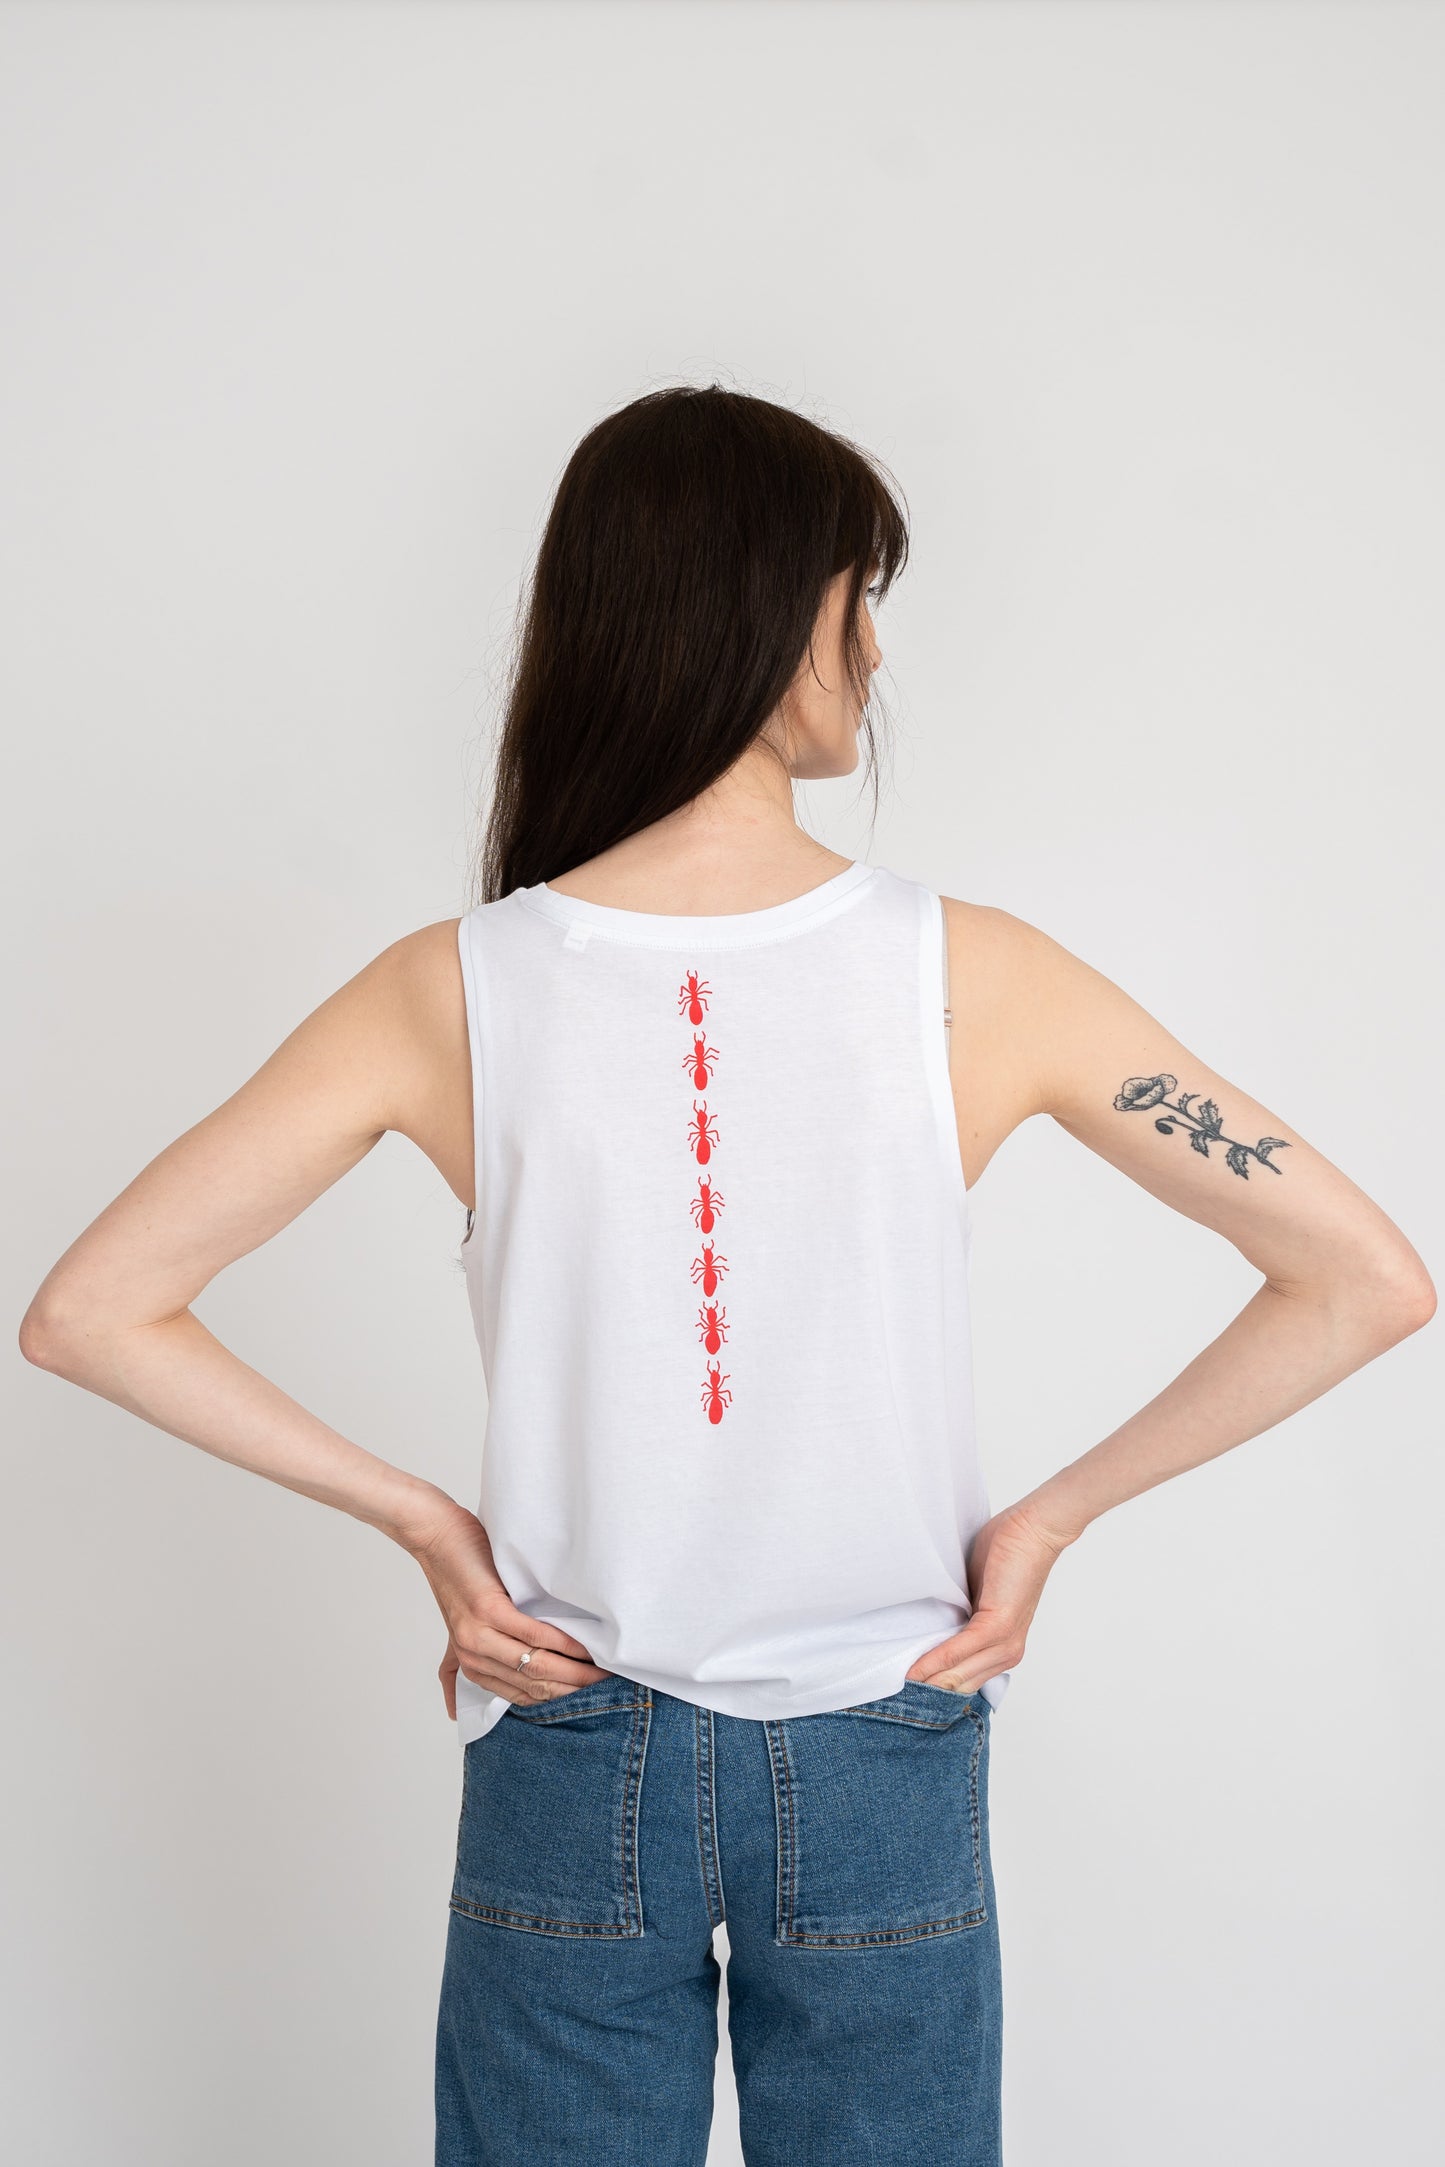 Women's short sleeveless t-shirt and red ants